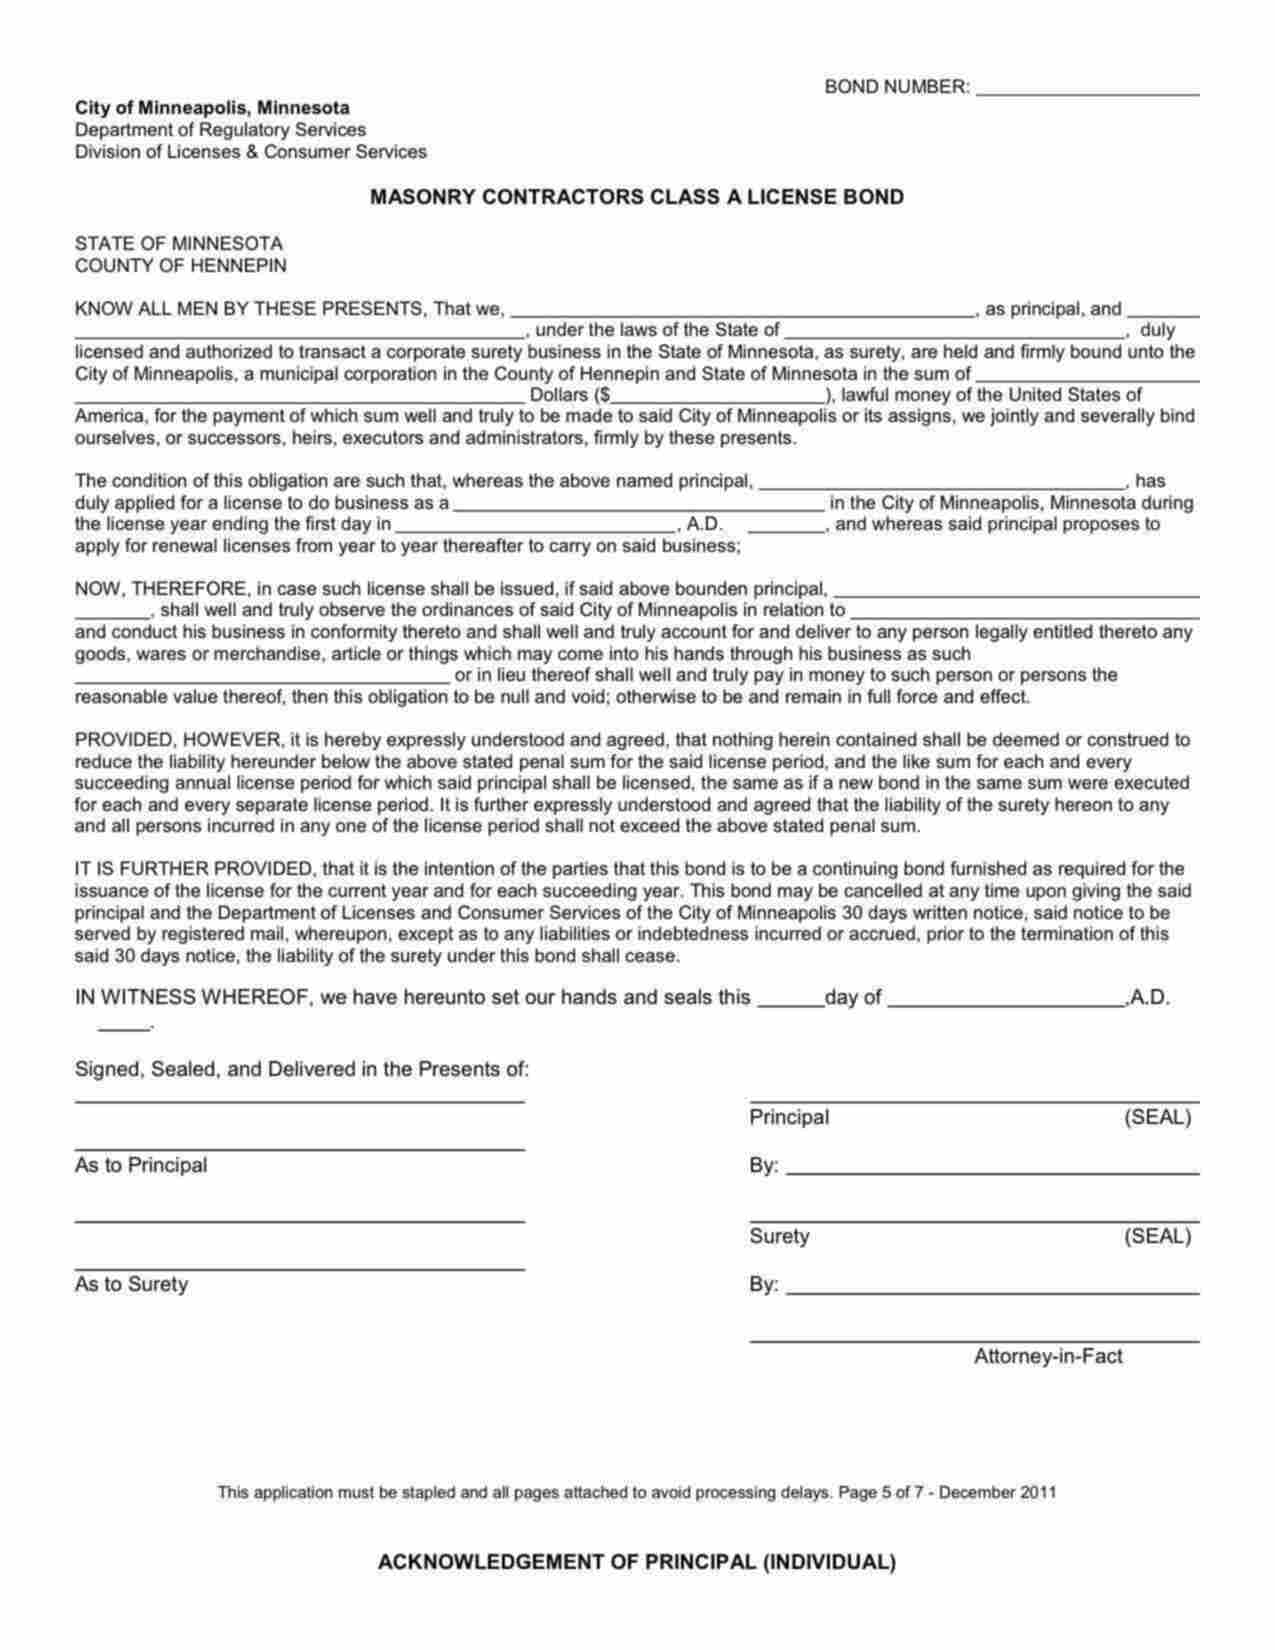 Minnesota Masonry Contractors Class A License Bond Form